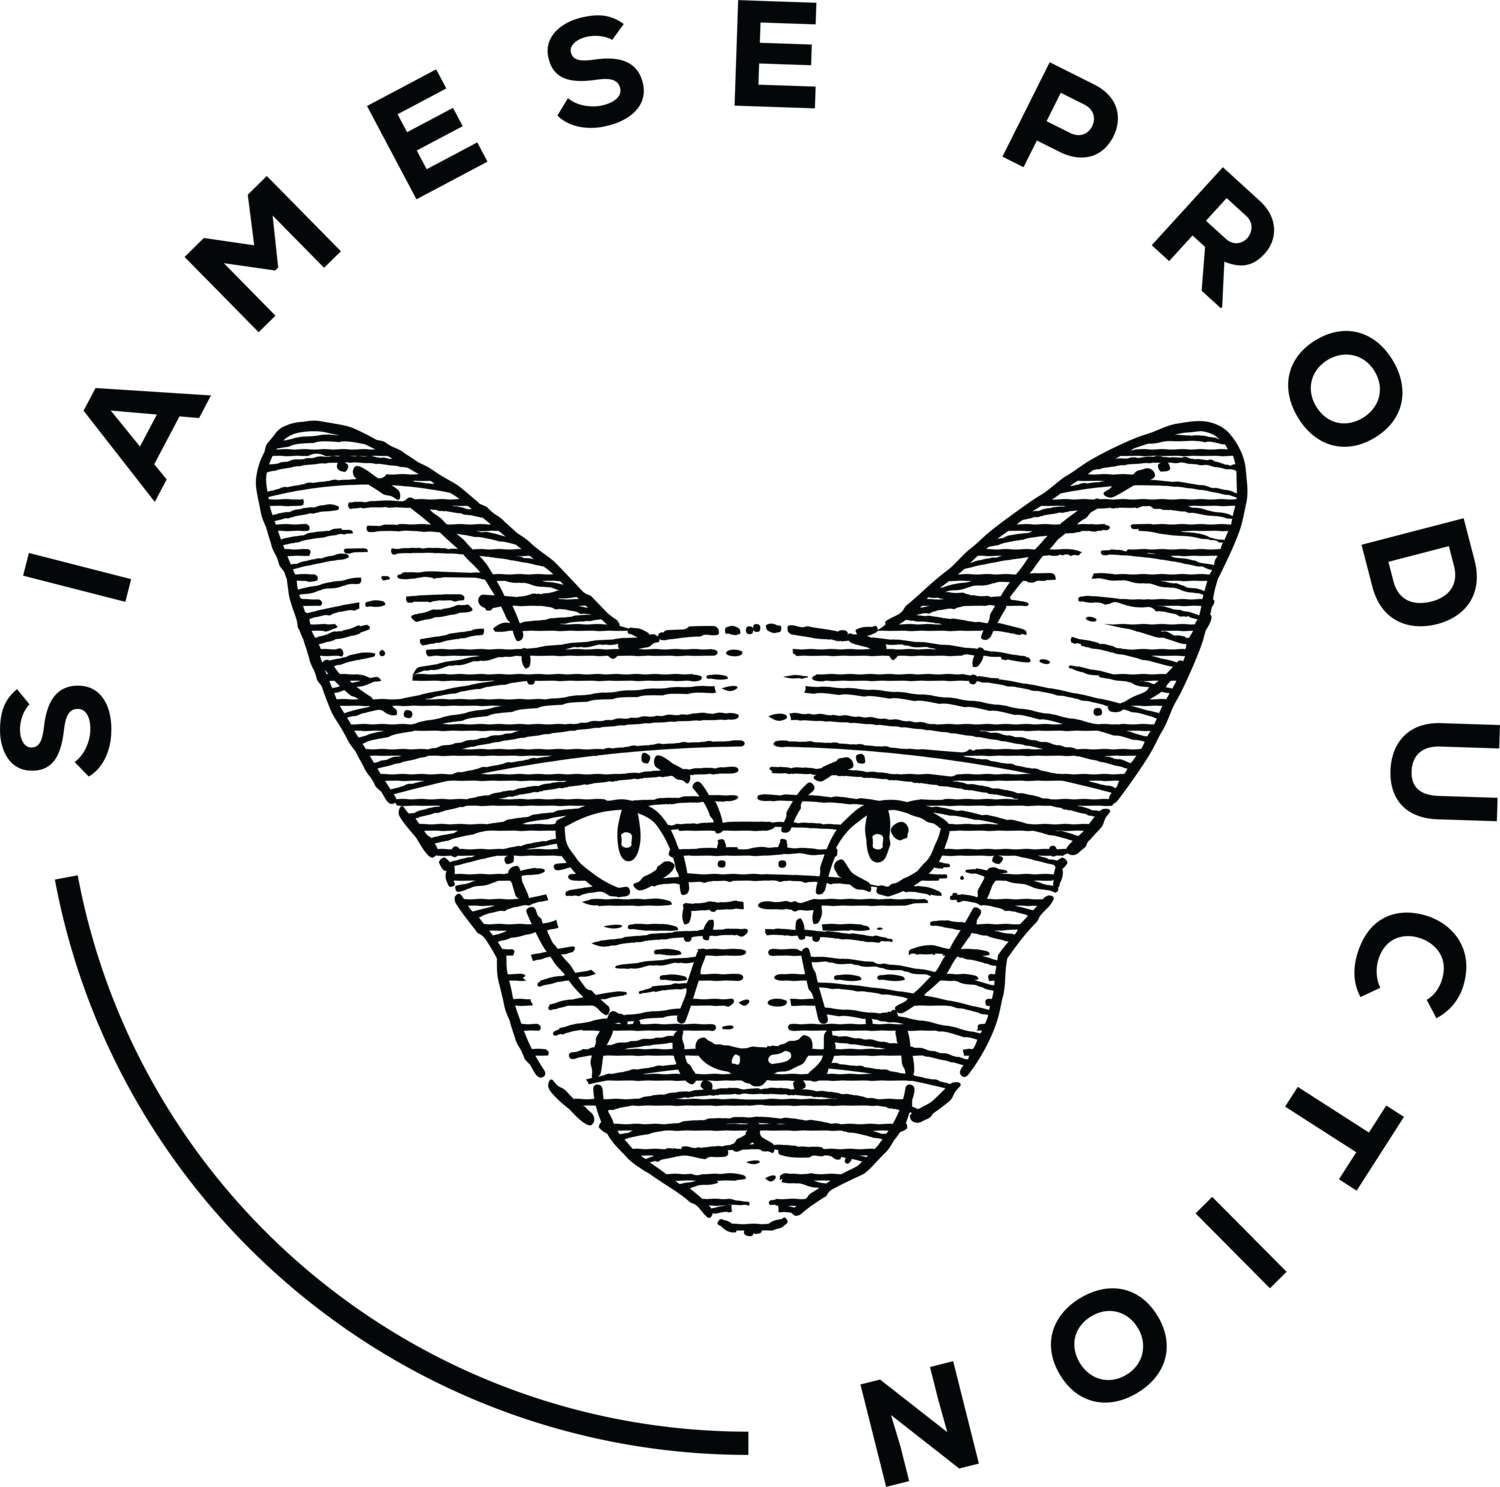 Siamese Production